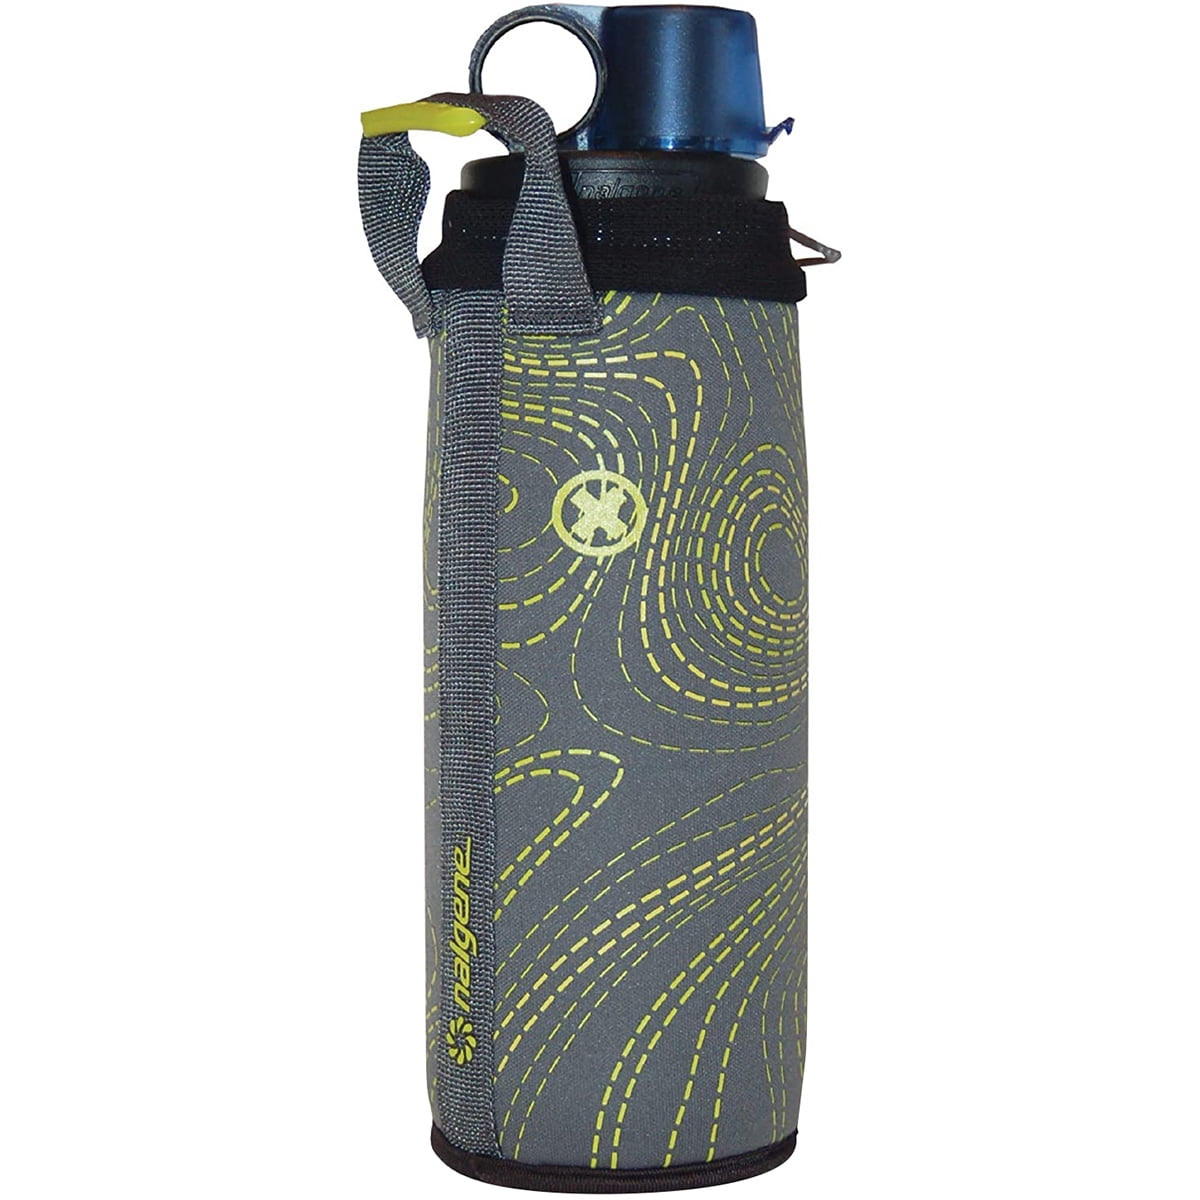 Comfort grip flex 16 oz water bottle with neoprene waist sleeve